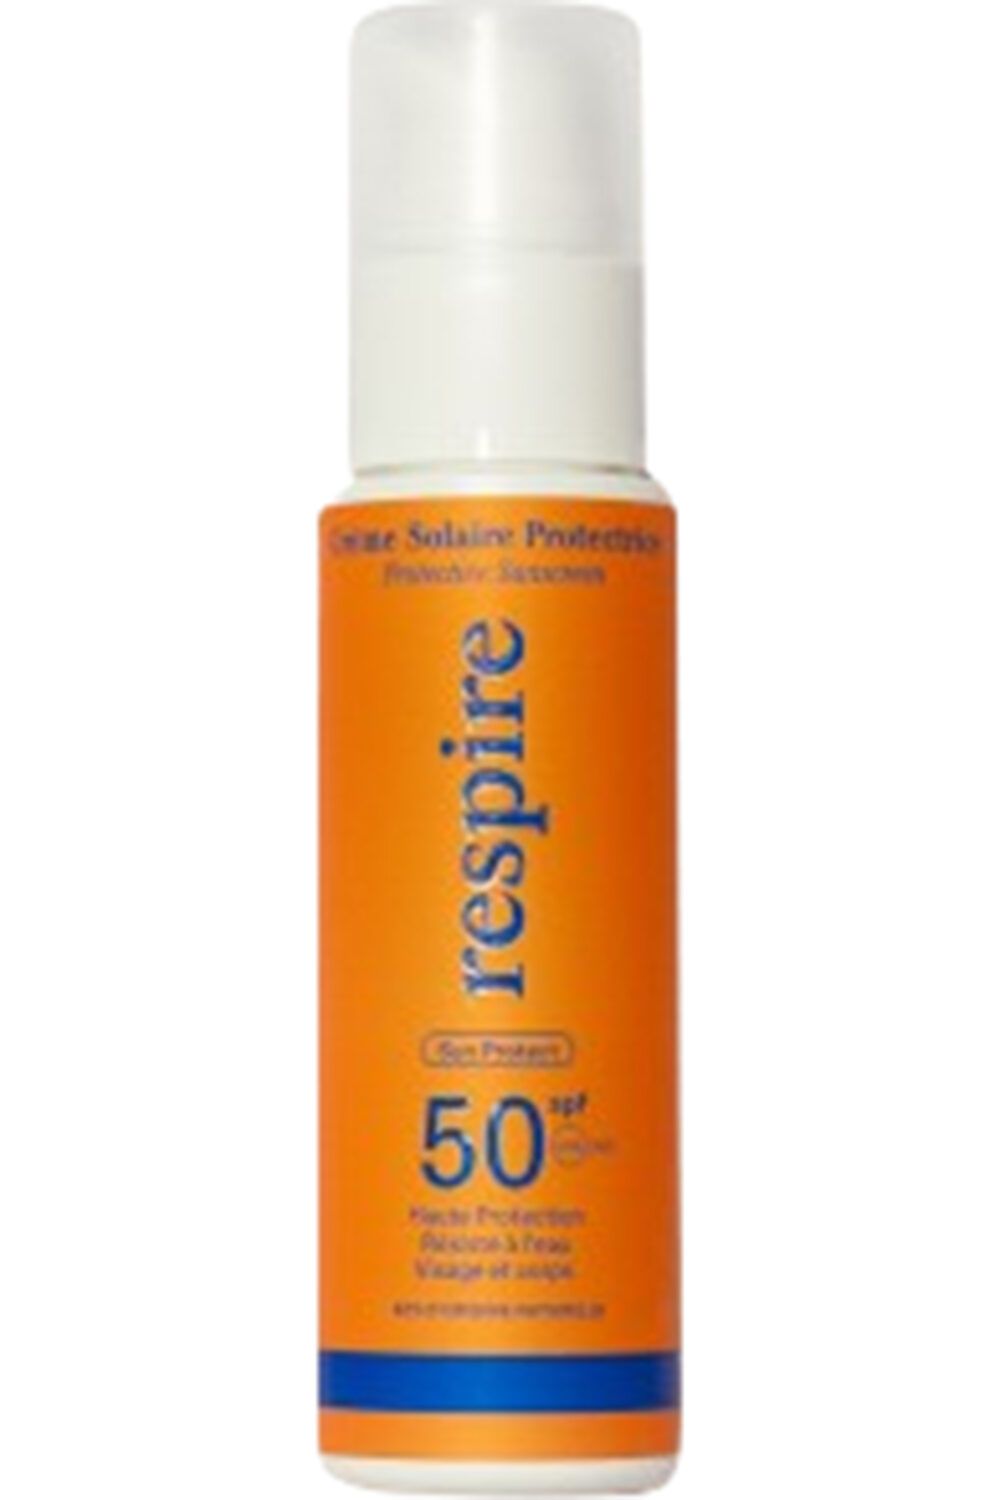 Respire - Crème solaire protectrice SPF50